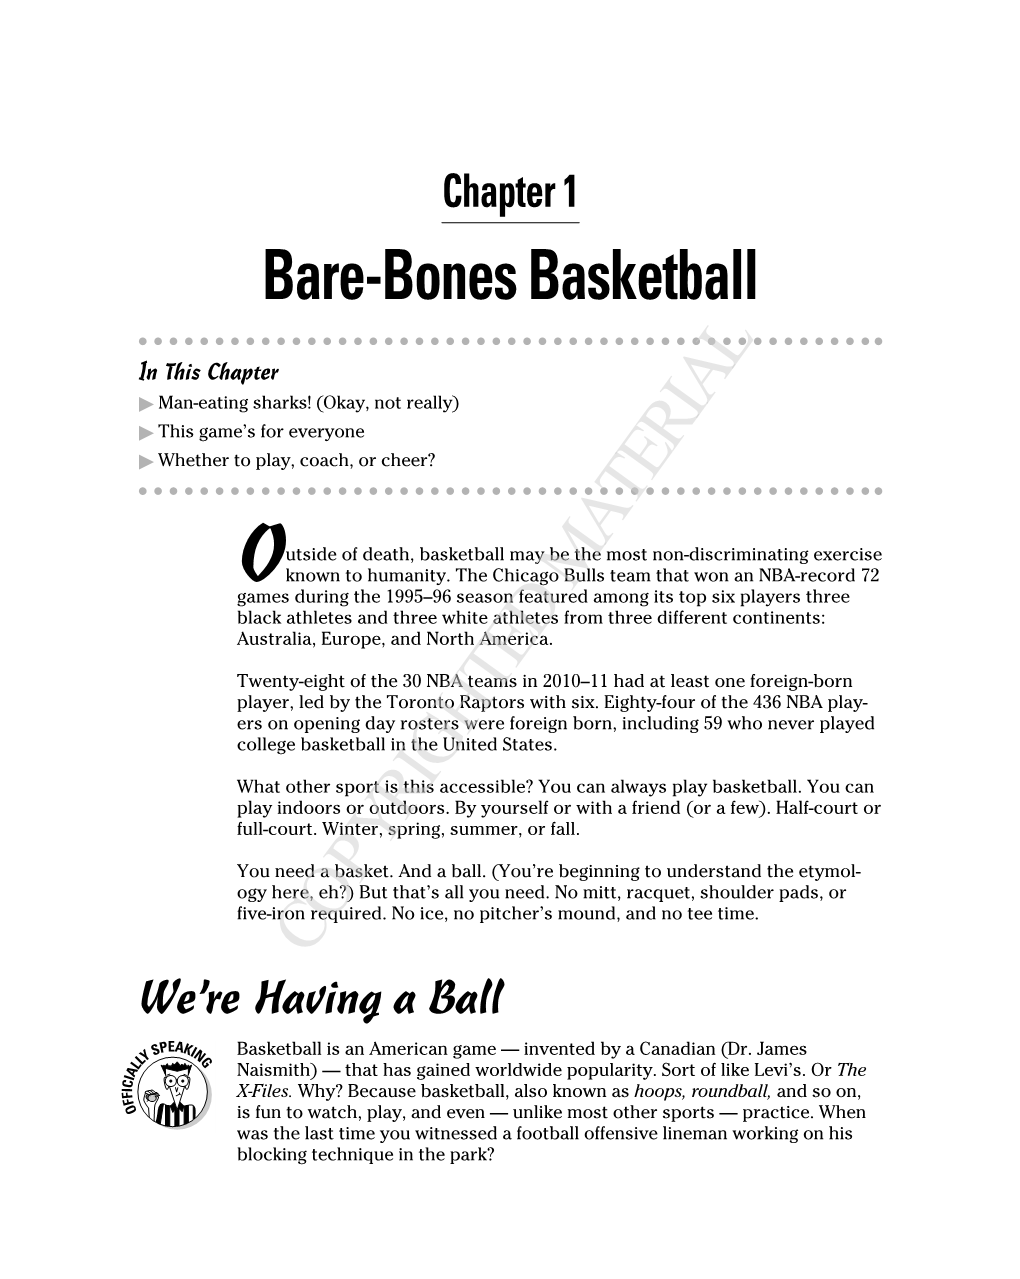 Bare-Bones Basketball